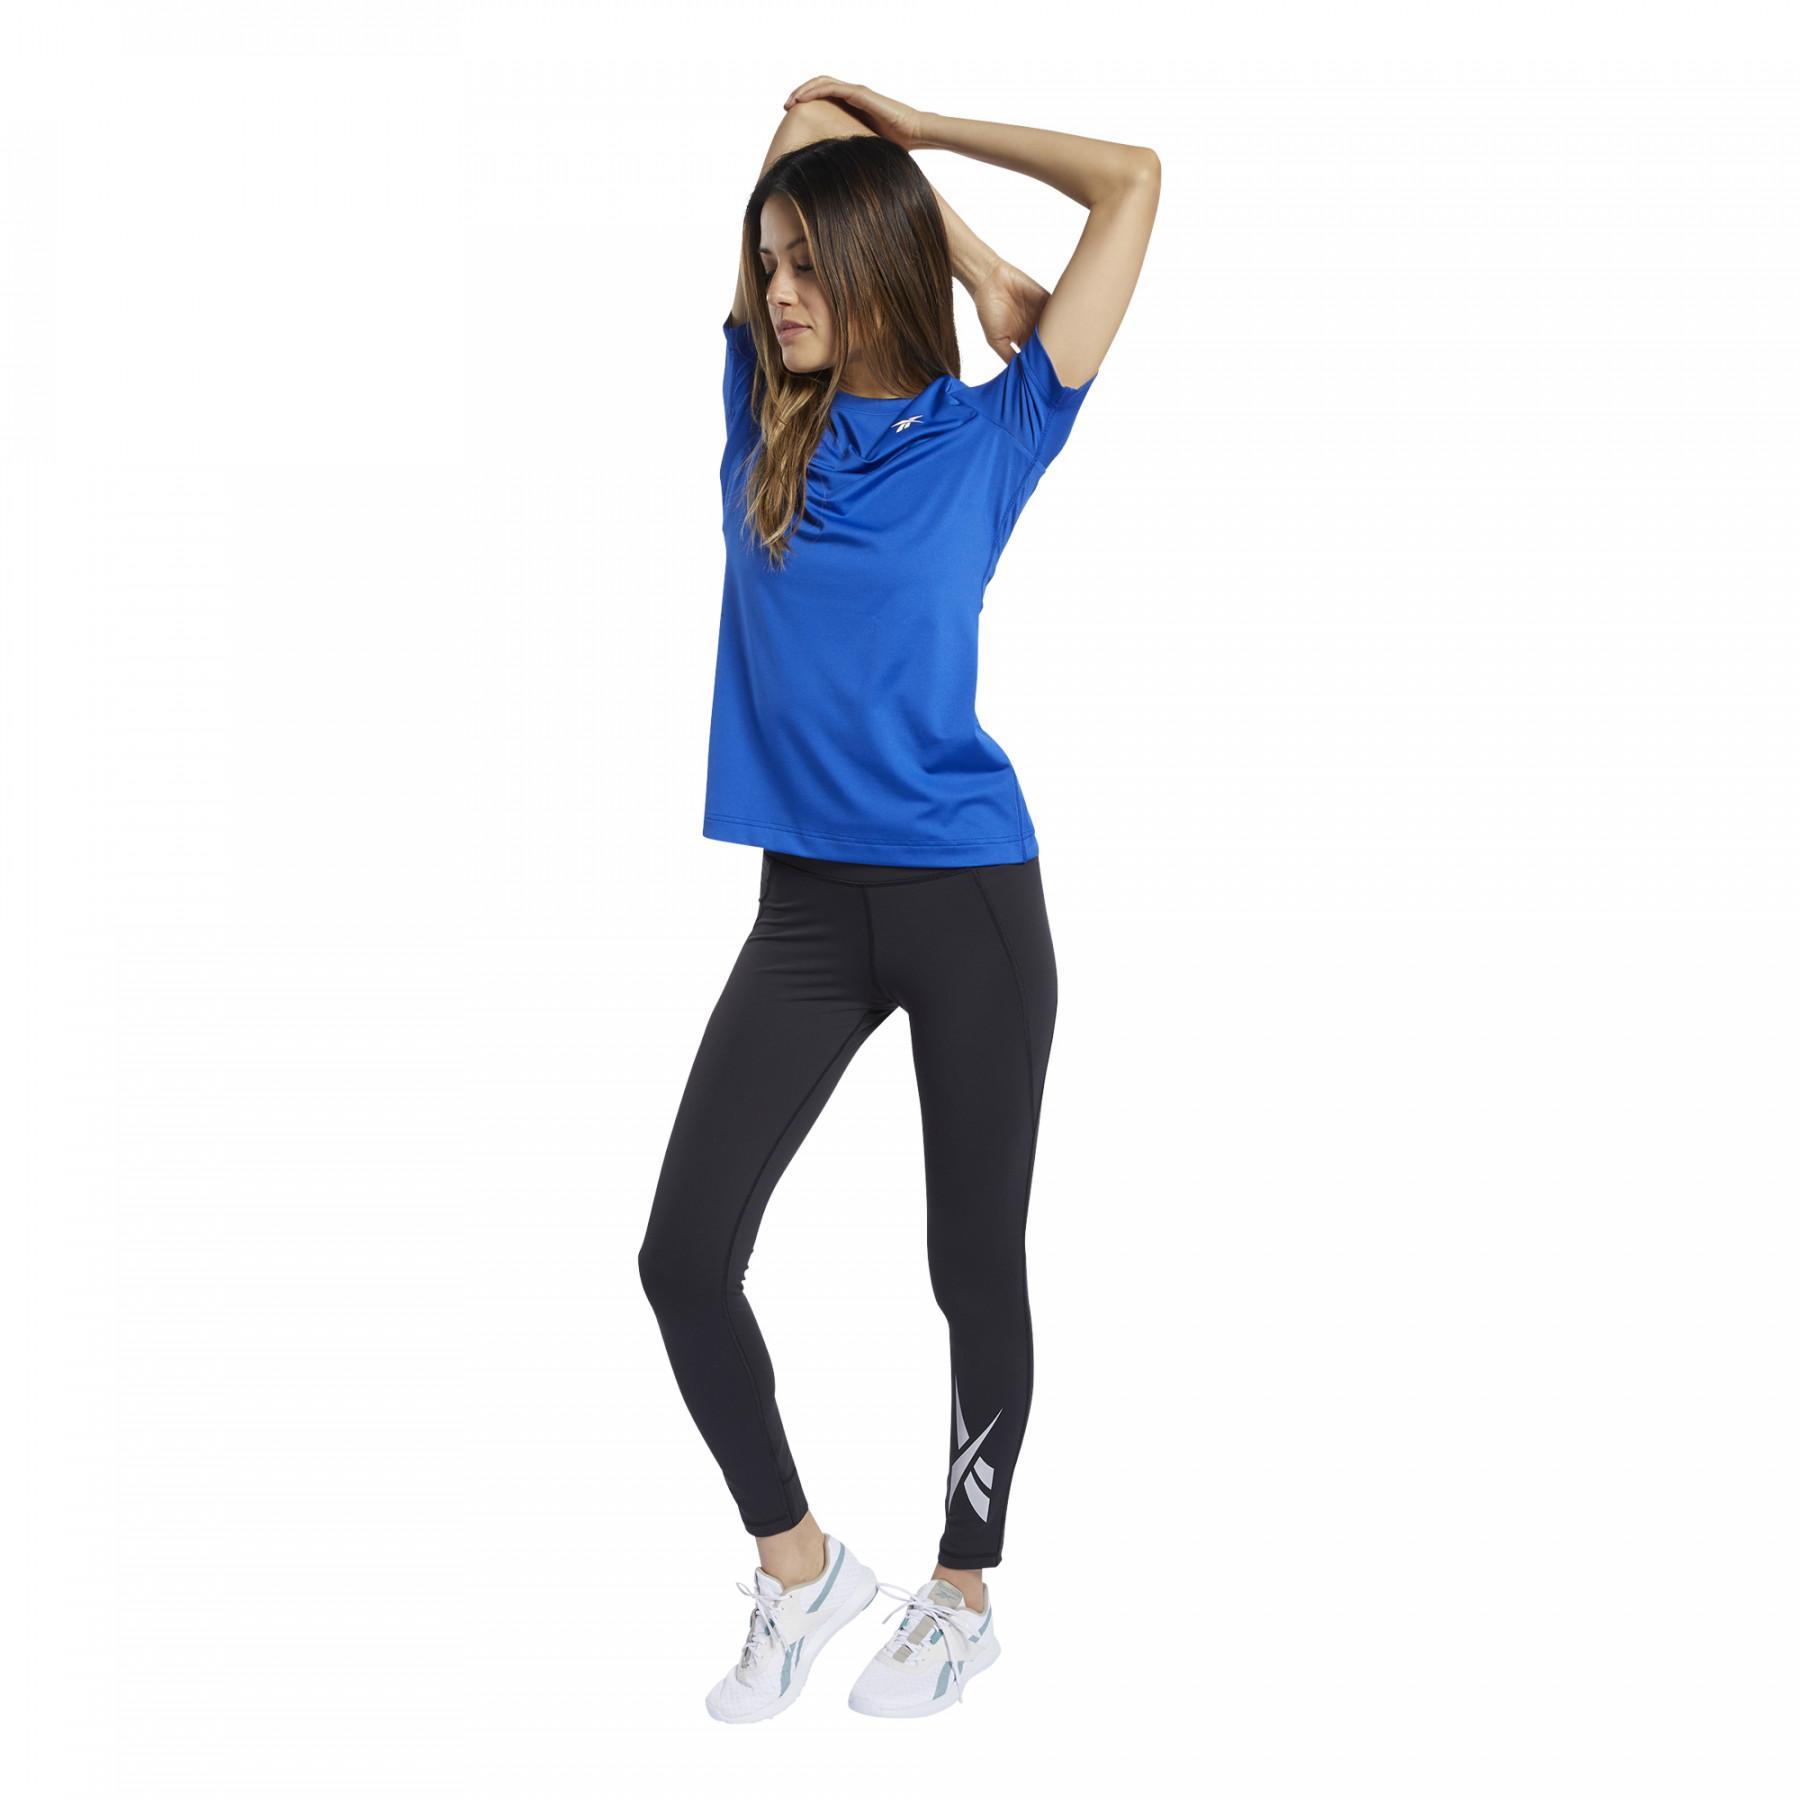 Frauen-T-Shirt Reebok Workout Supremium 2.0